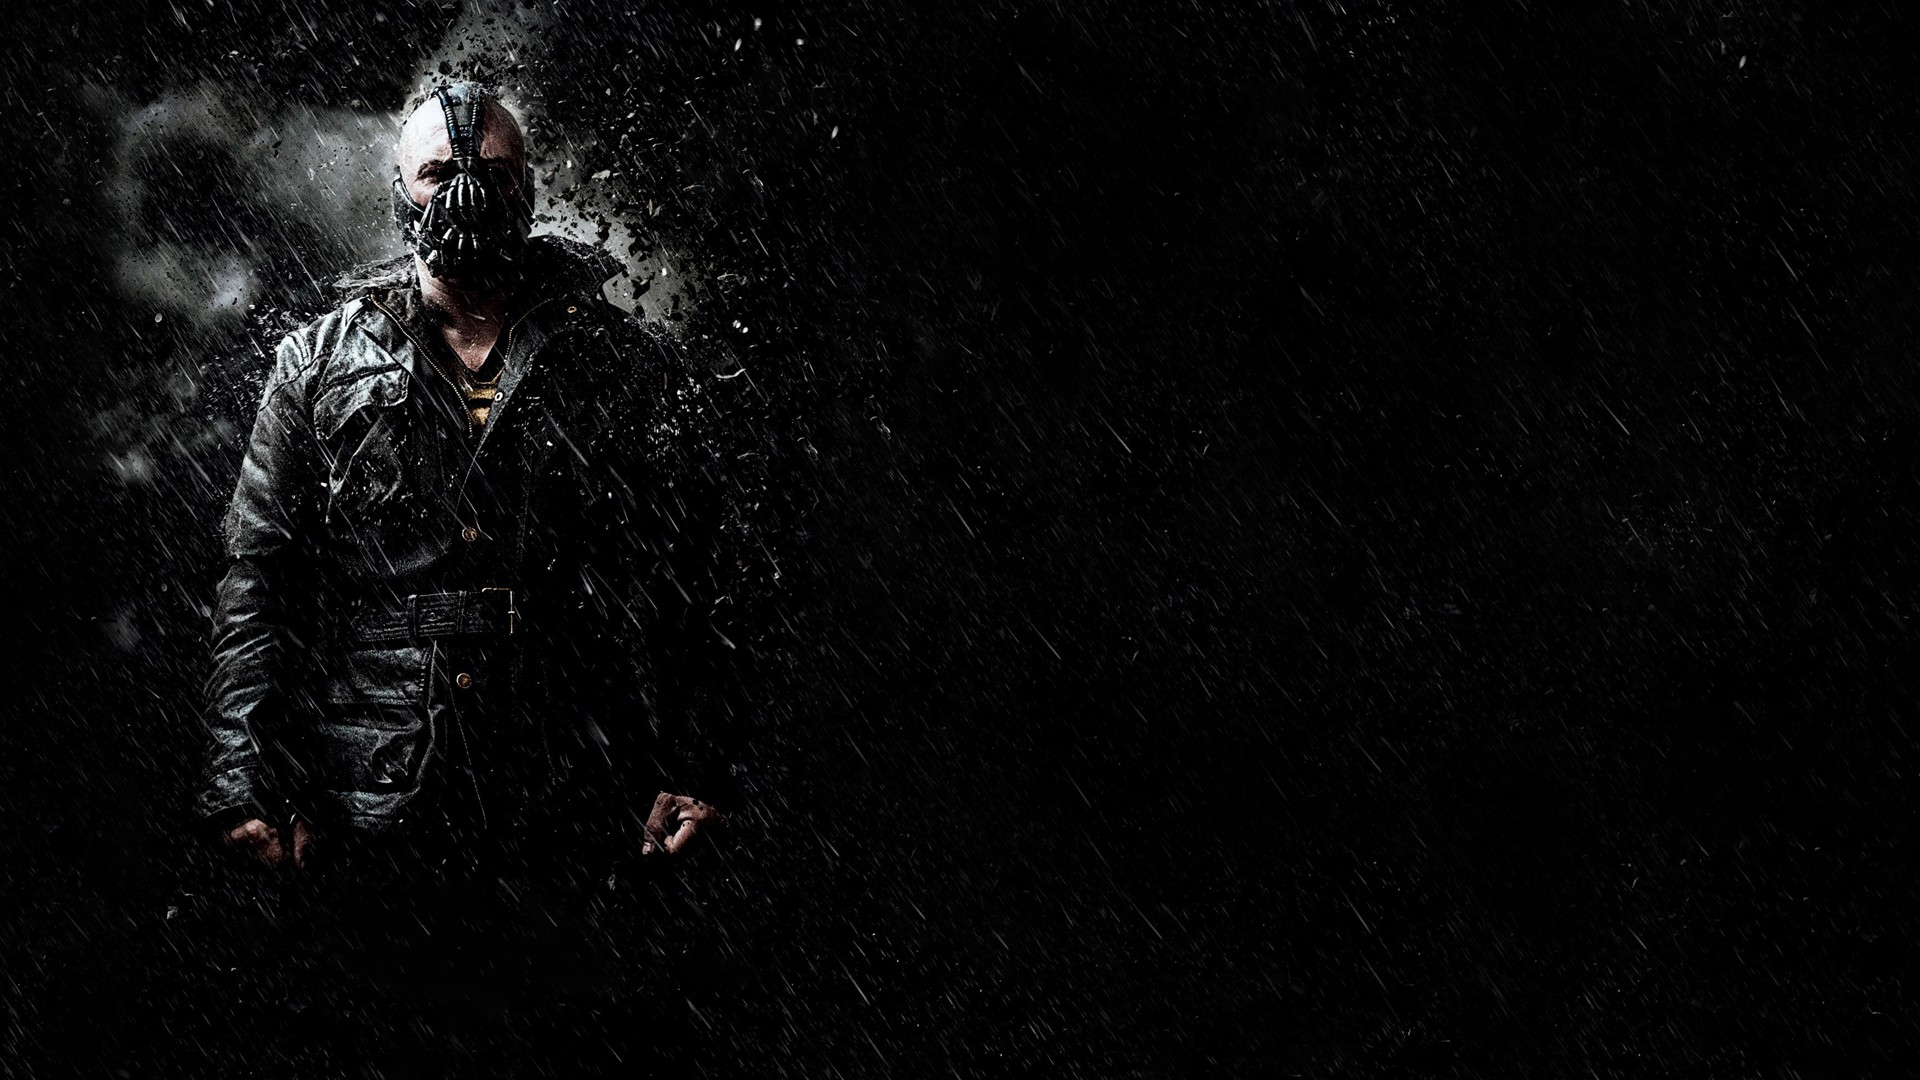 Movie The Dark Knight Rises HD Wallpaper | Background Image